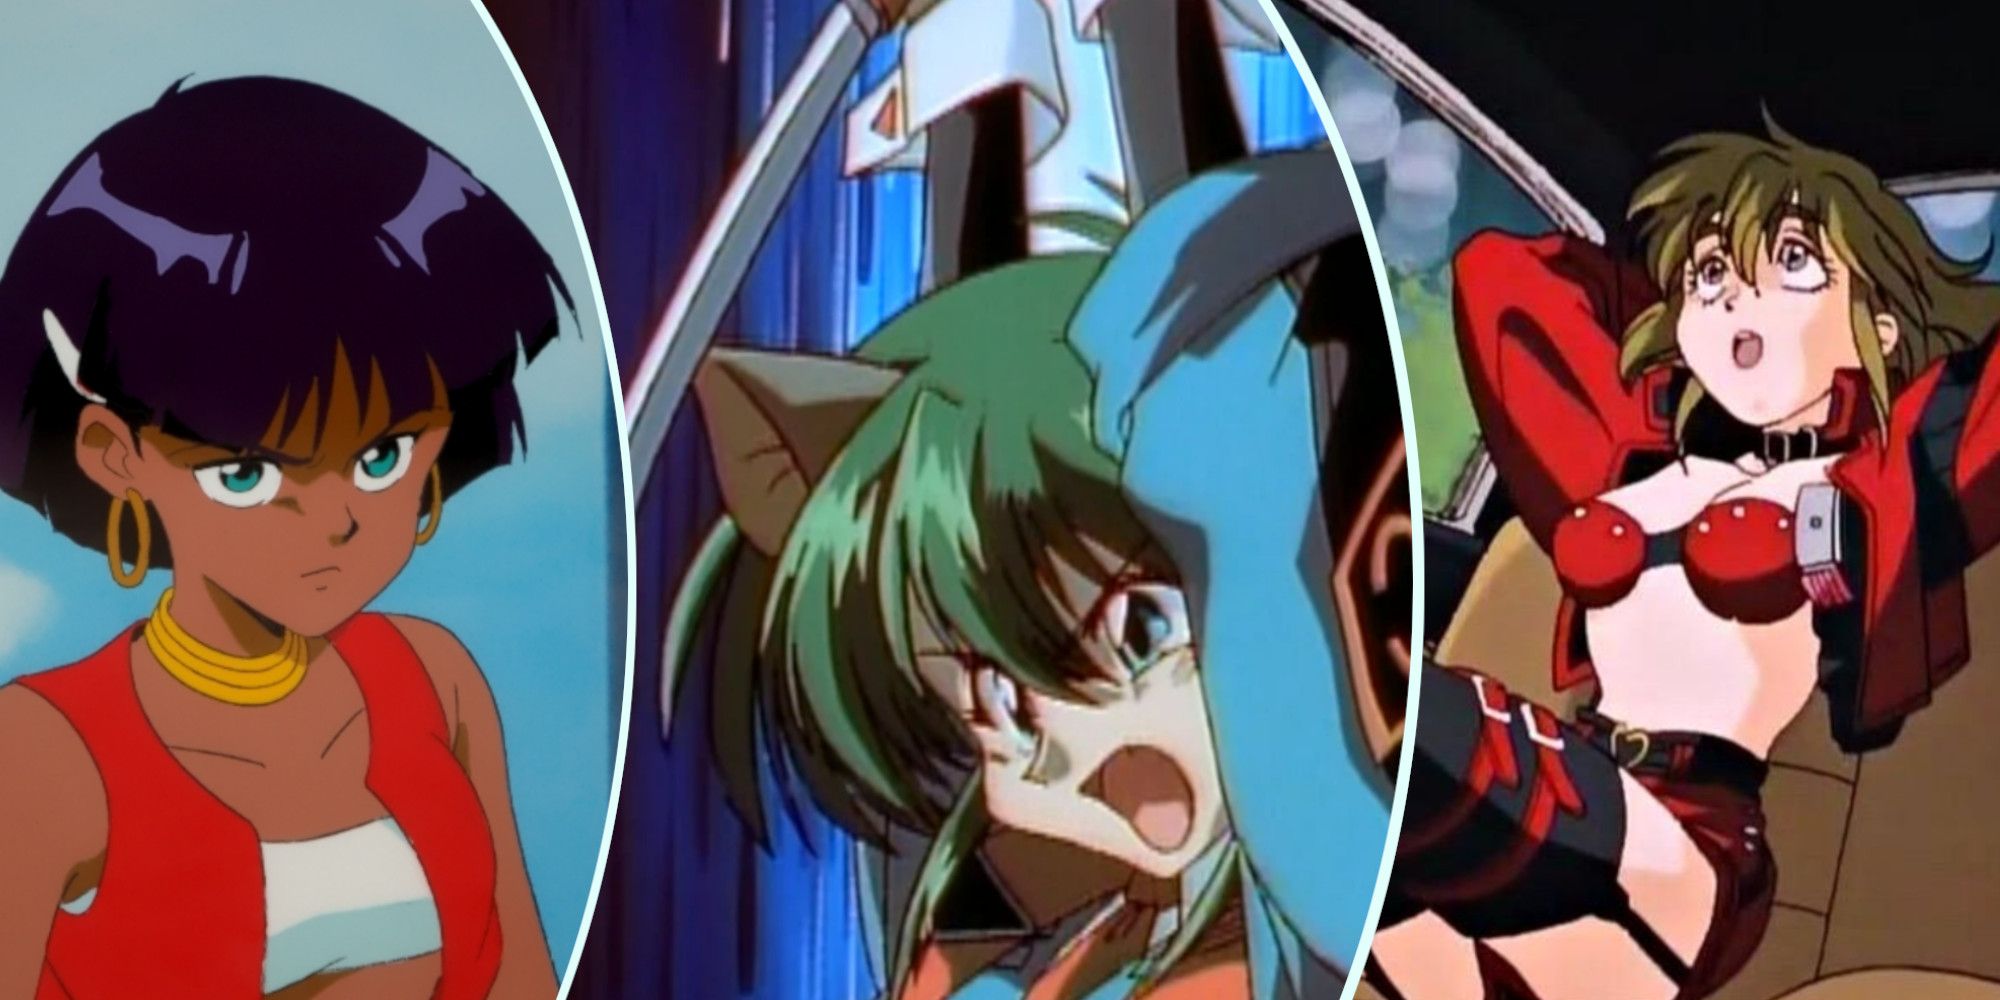 Rachel Gardner as in 90s anime by shuunia on DeviantArt